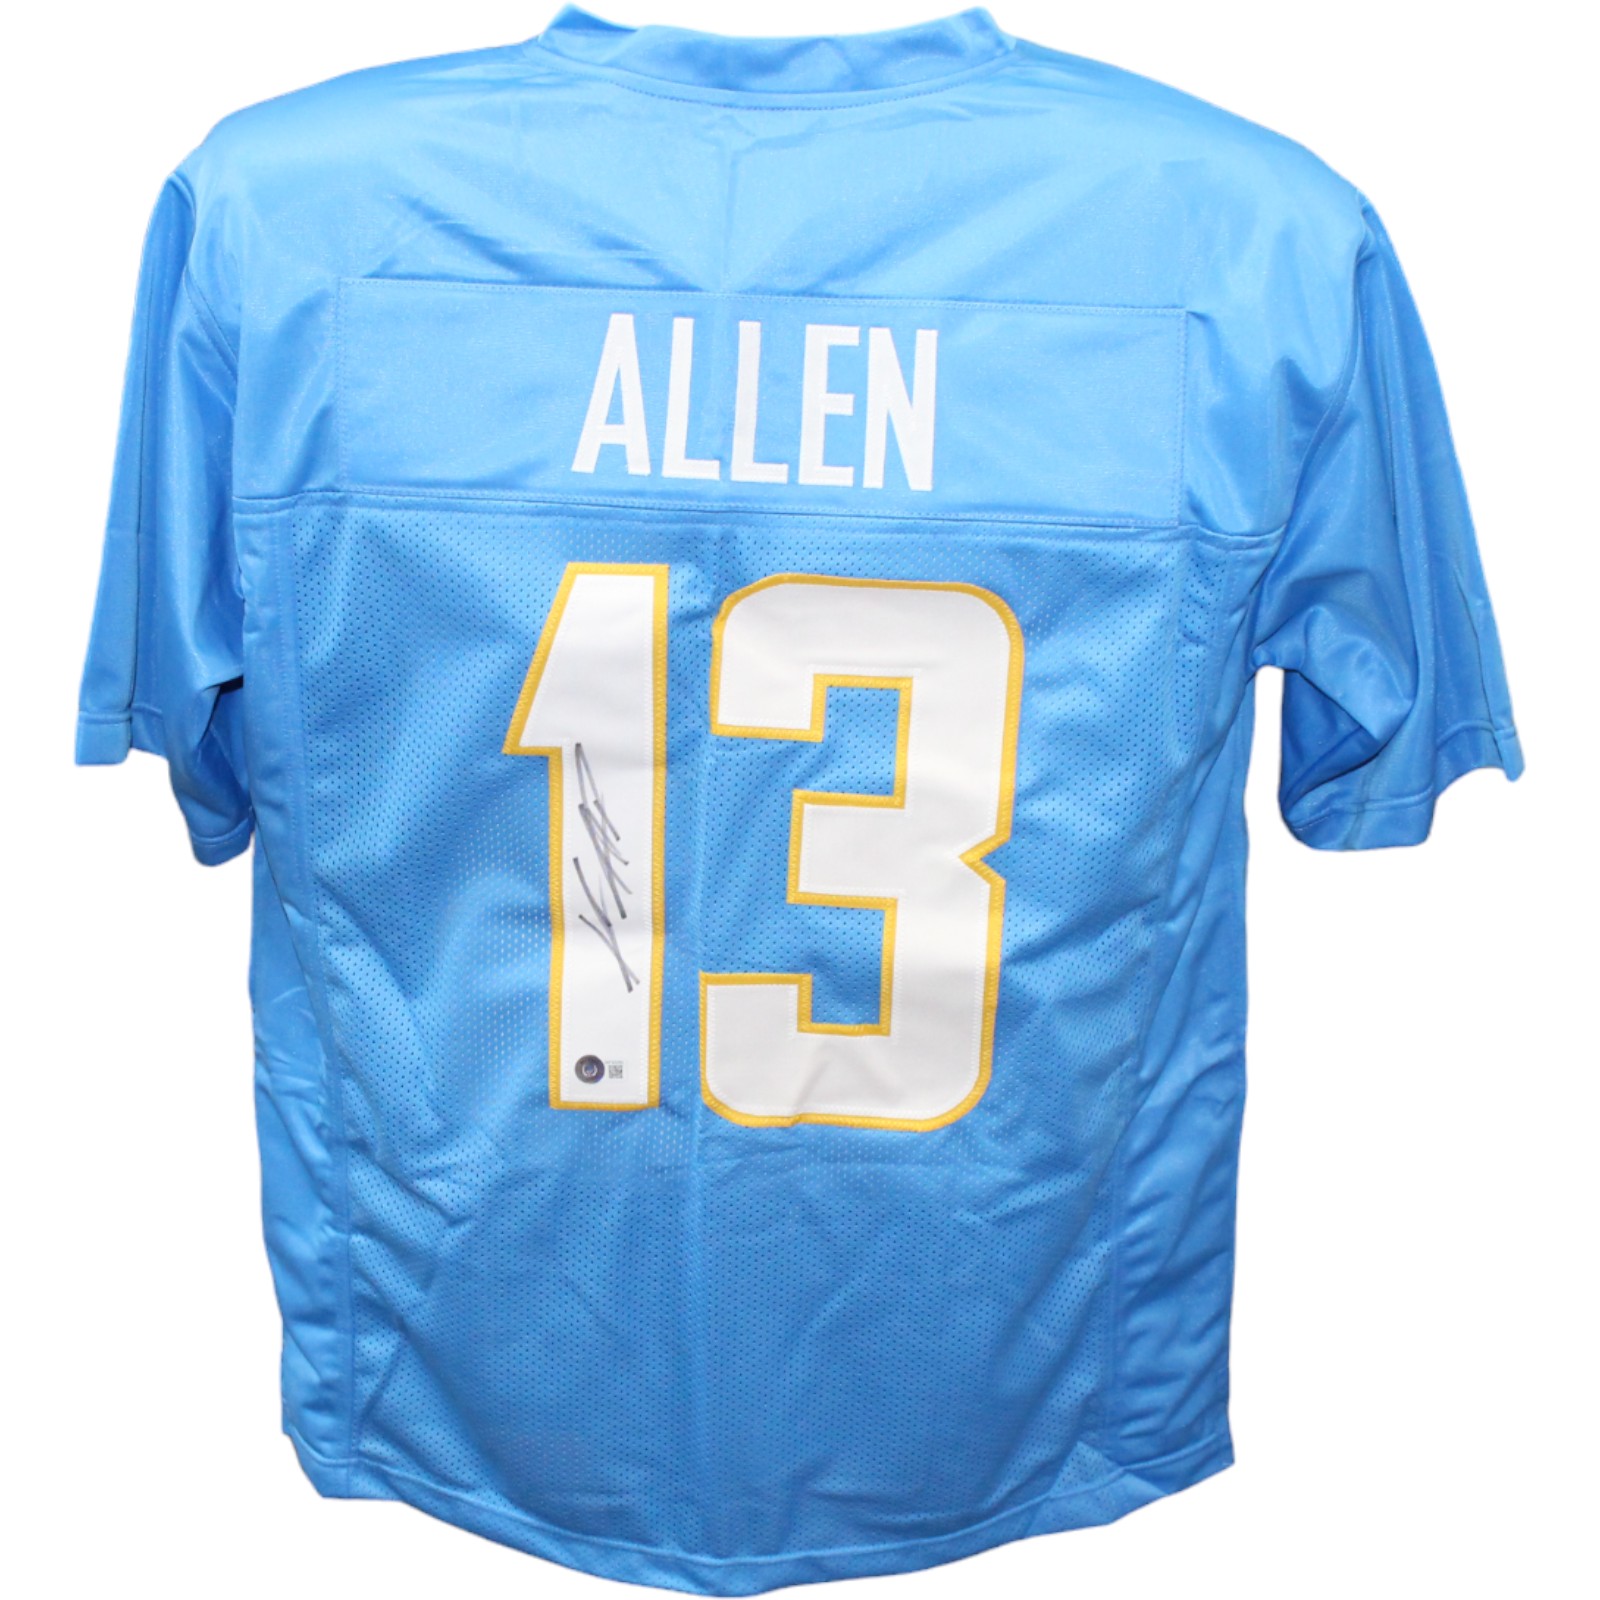 Keenan Allen Autographed/Signed Pro Style Blue Jersey Beckett